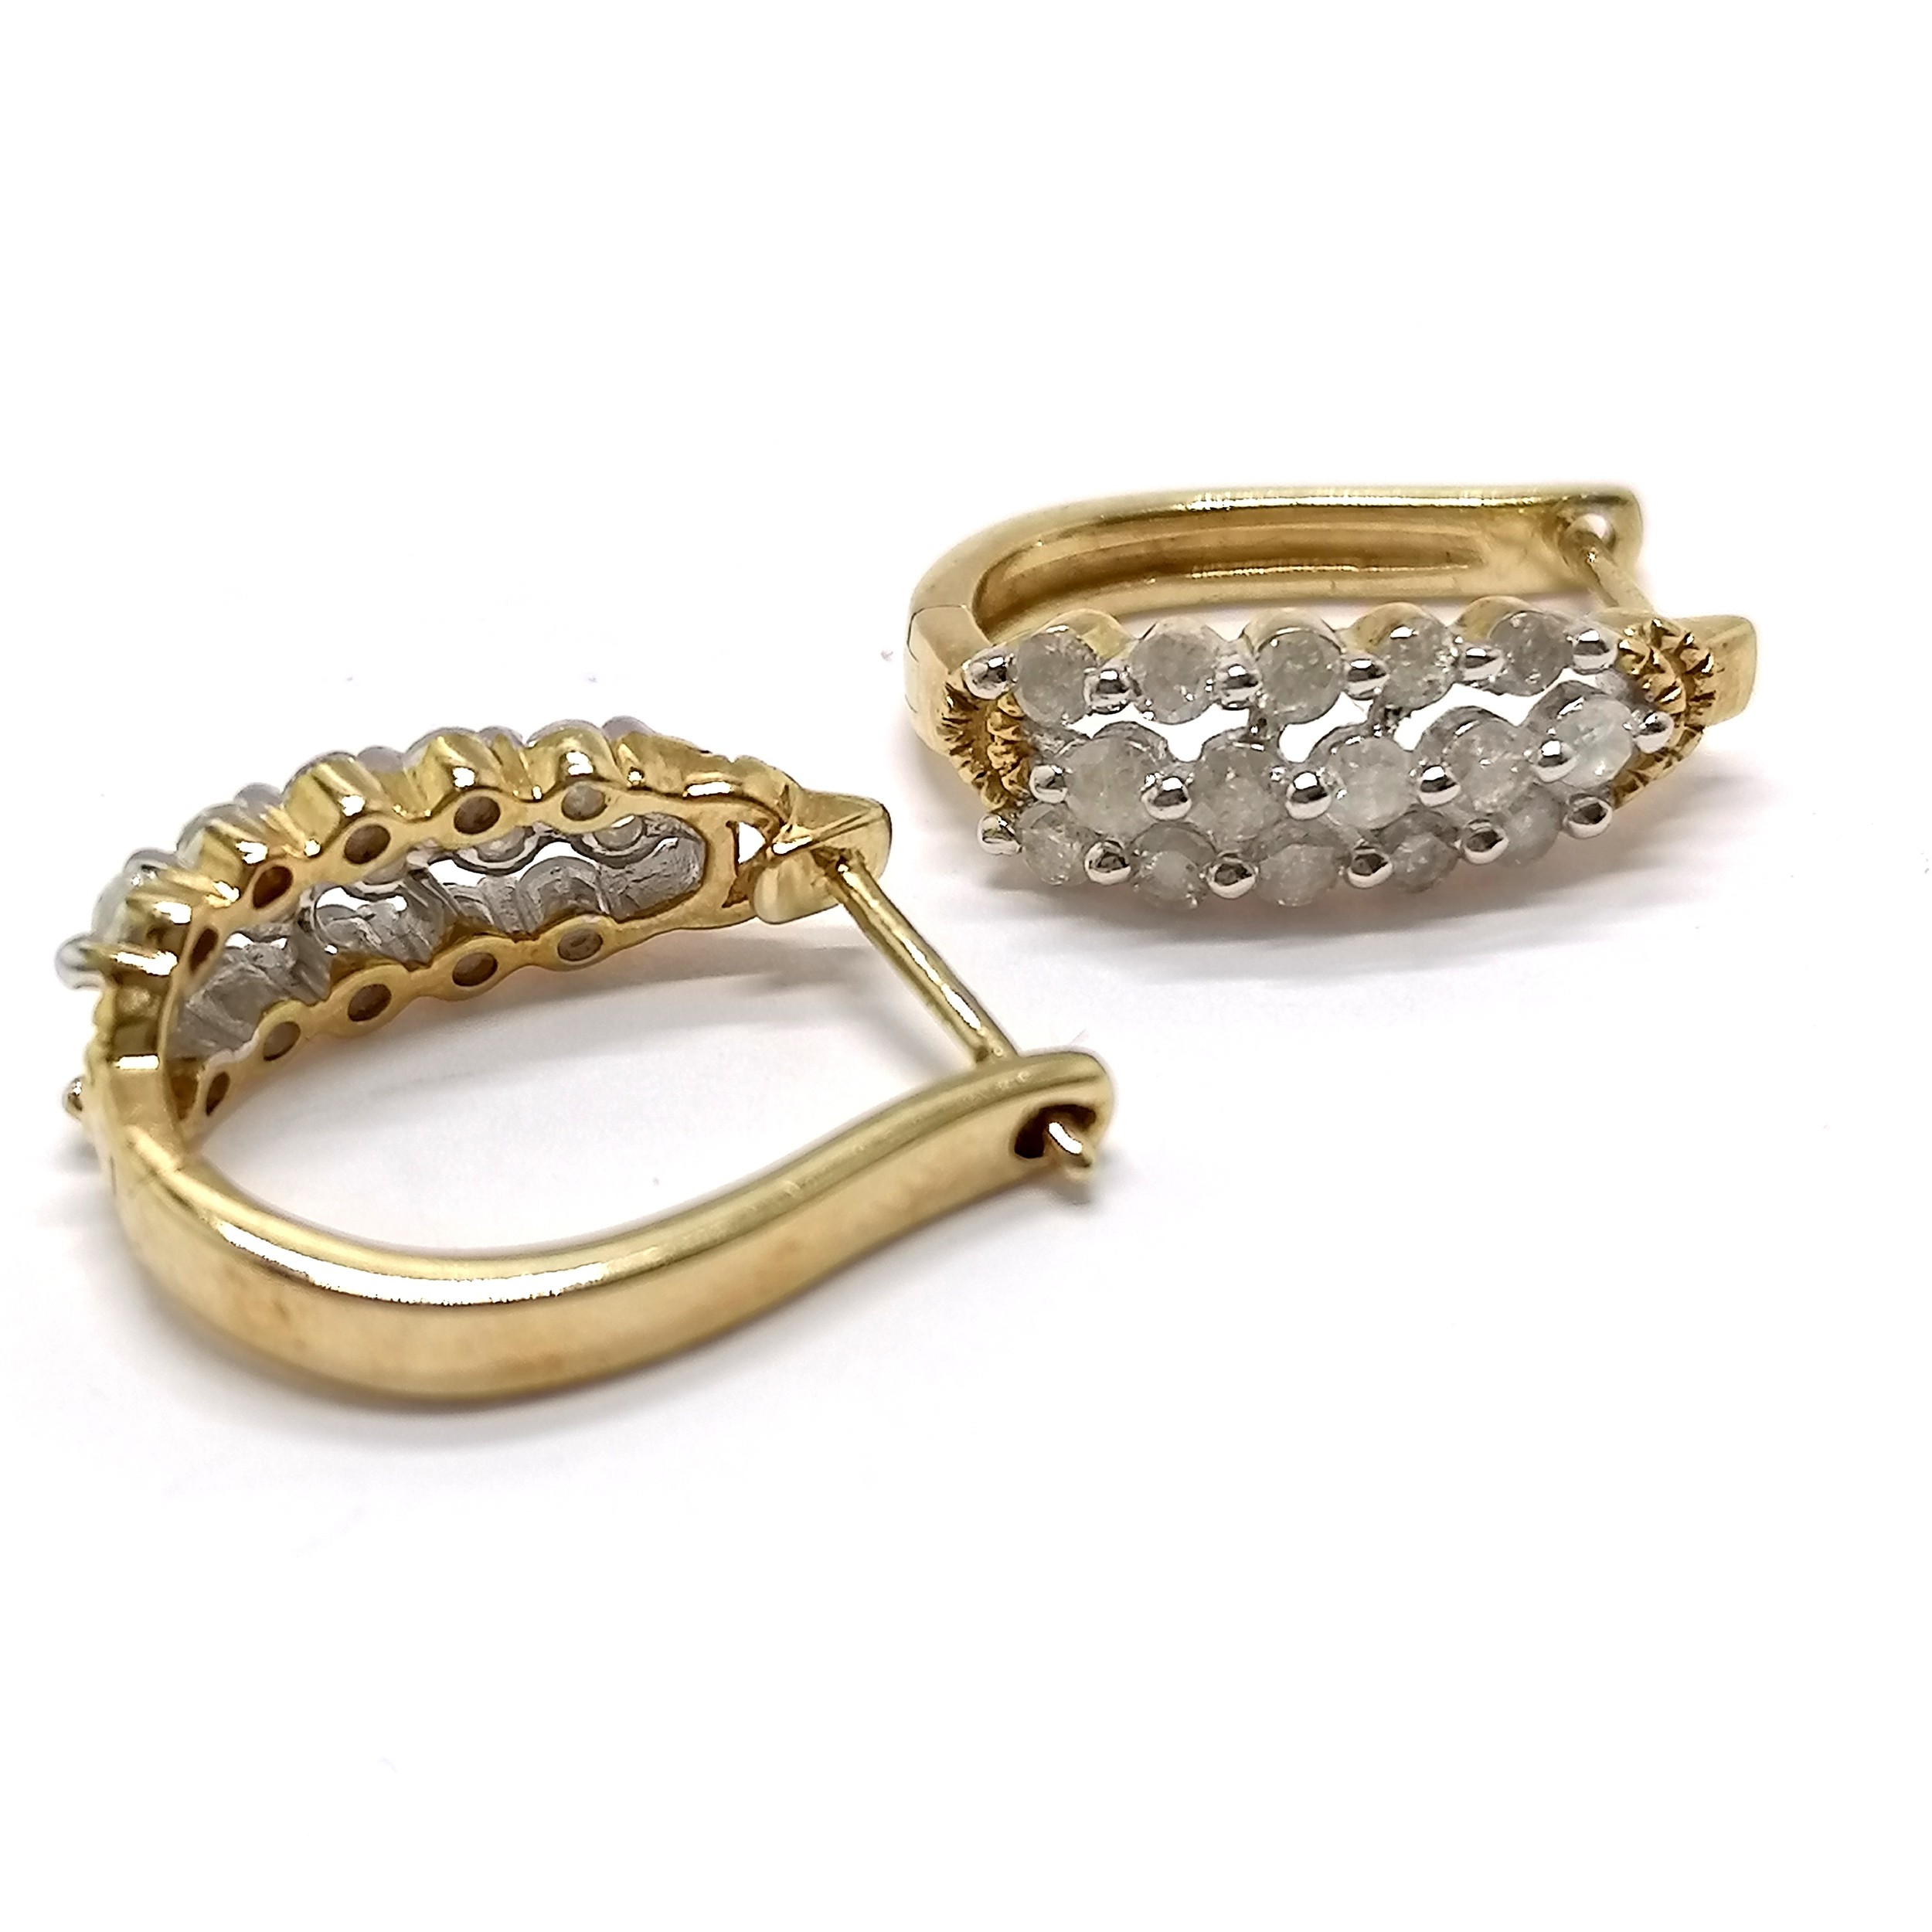 Pair of 9ct hallmarked gold diamond set hoop earrings - 1.8cm drop & 4.2g total weight - Image 2 of 2